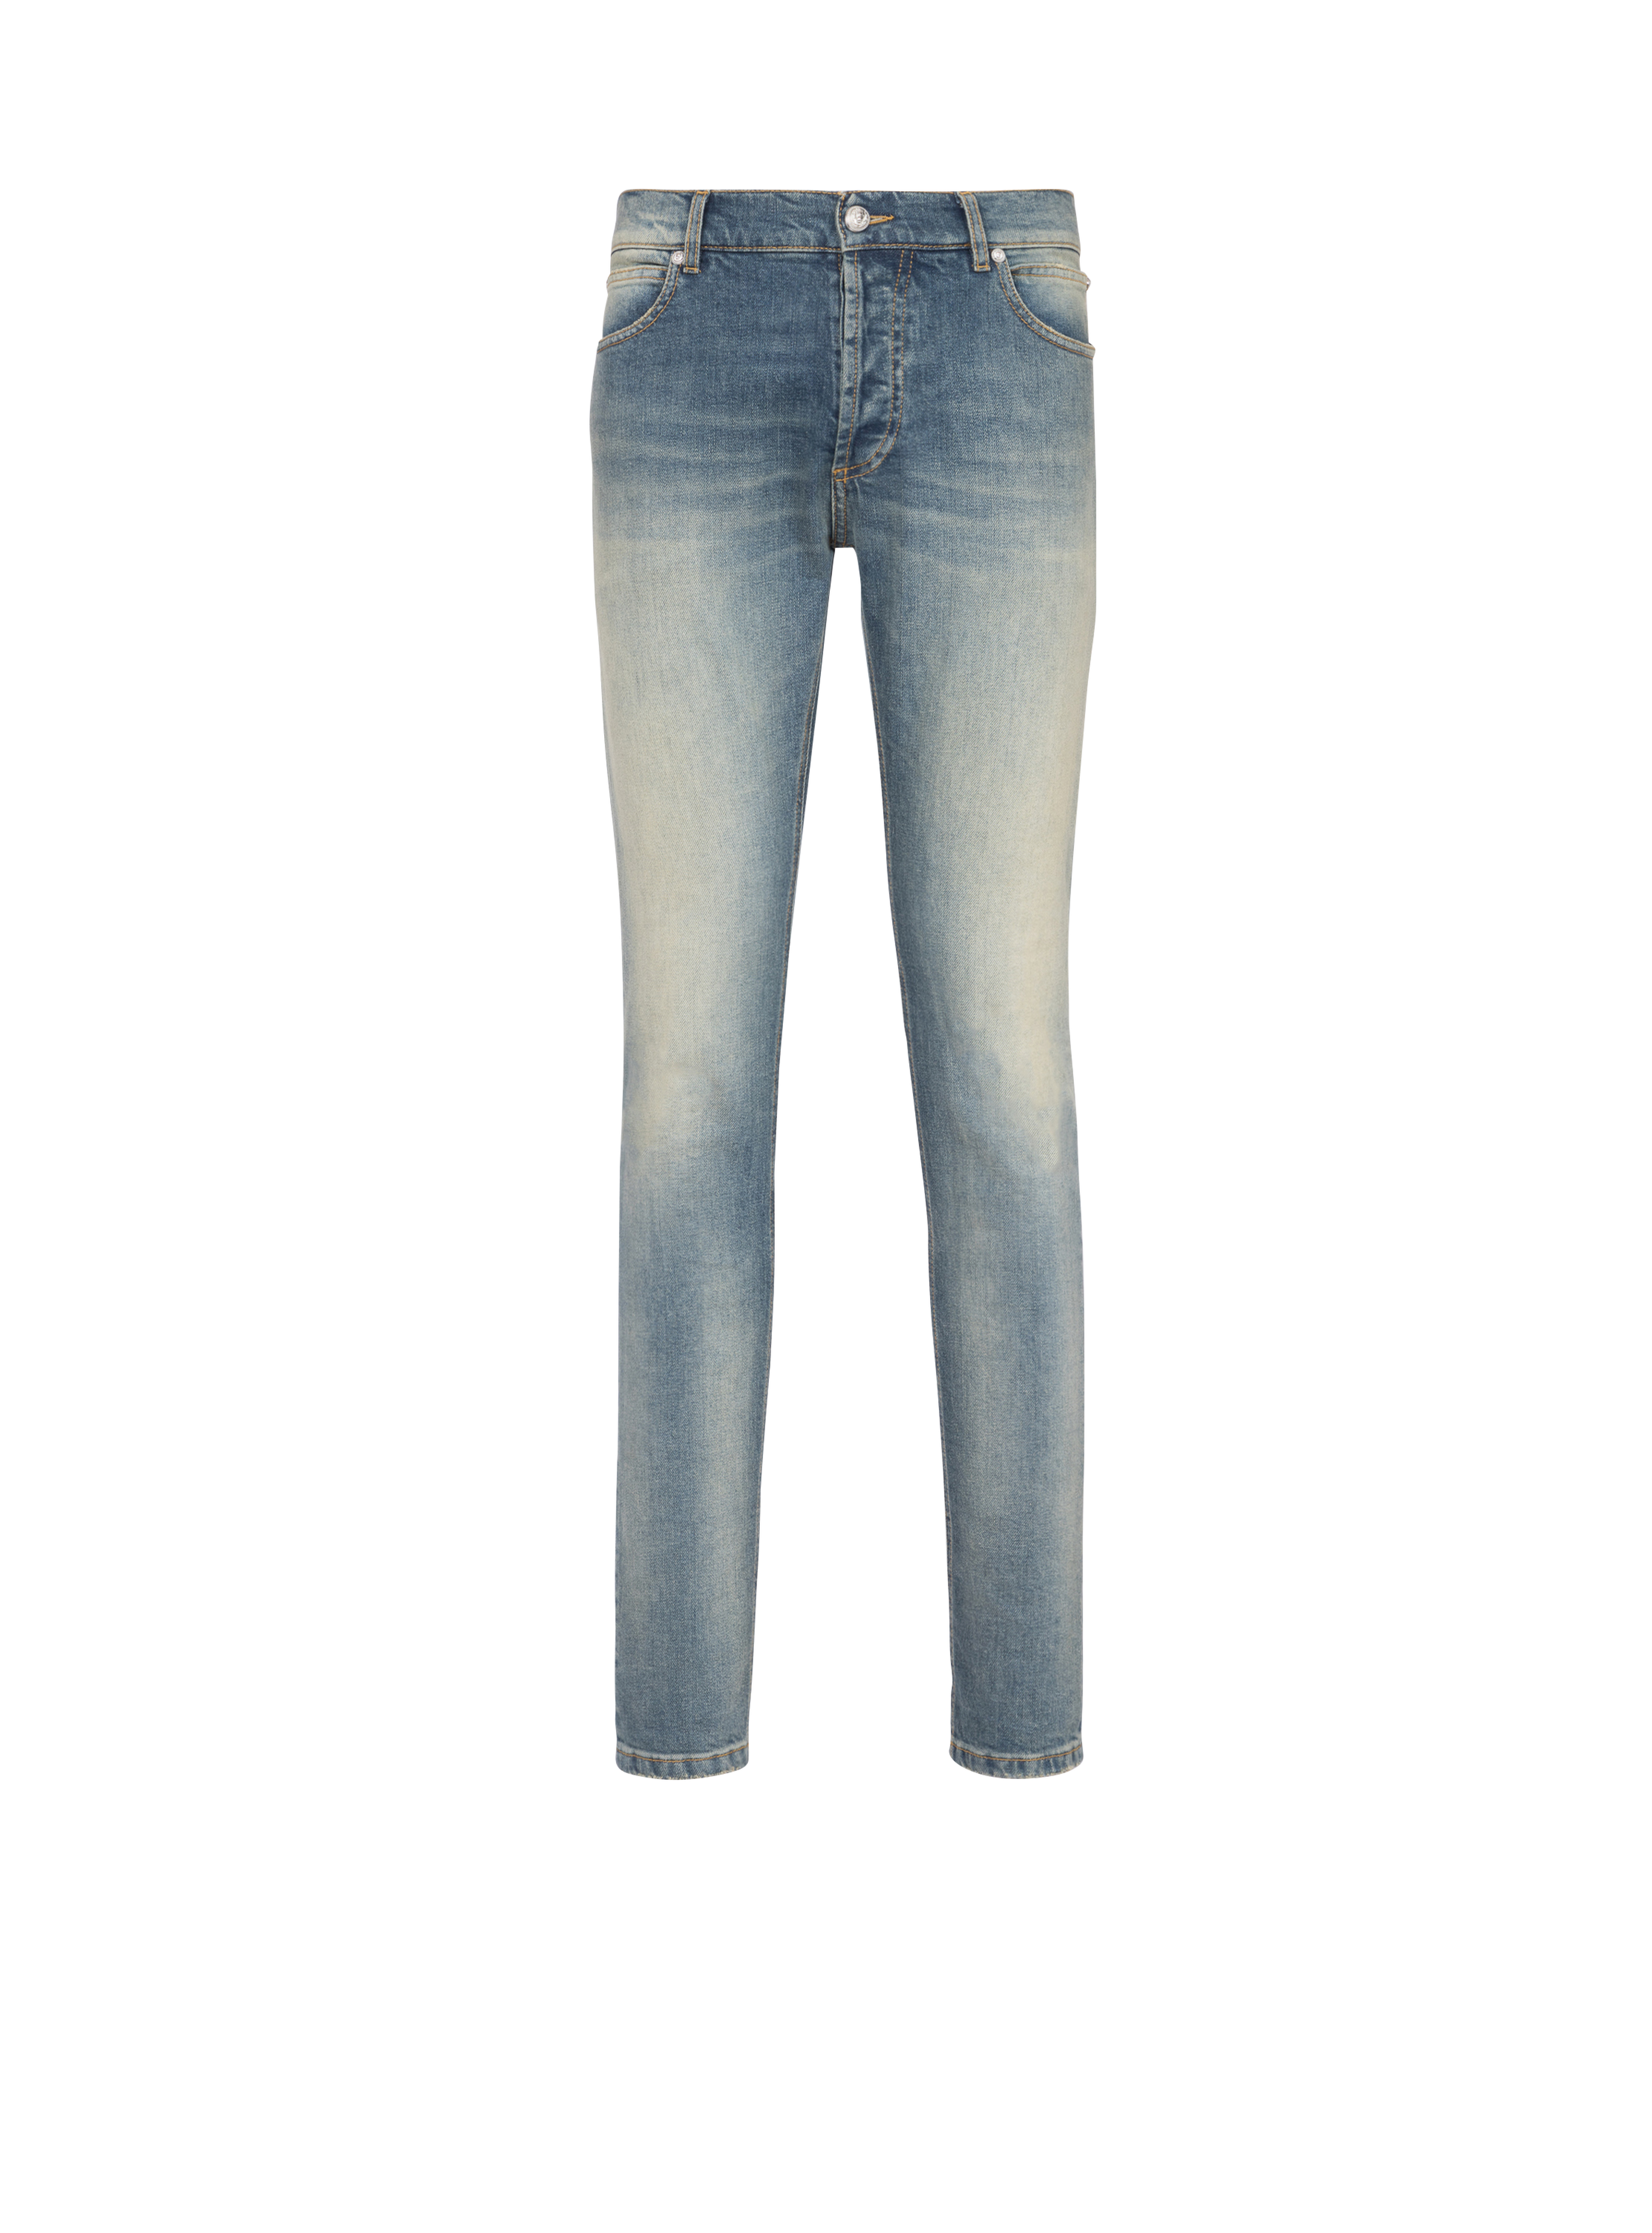 Slim cut faded cotton jeans, blue